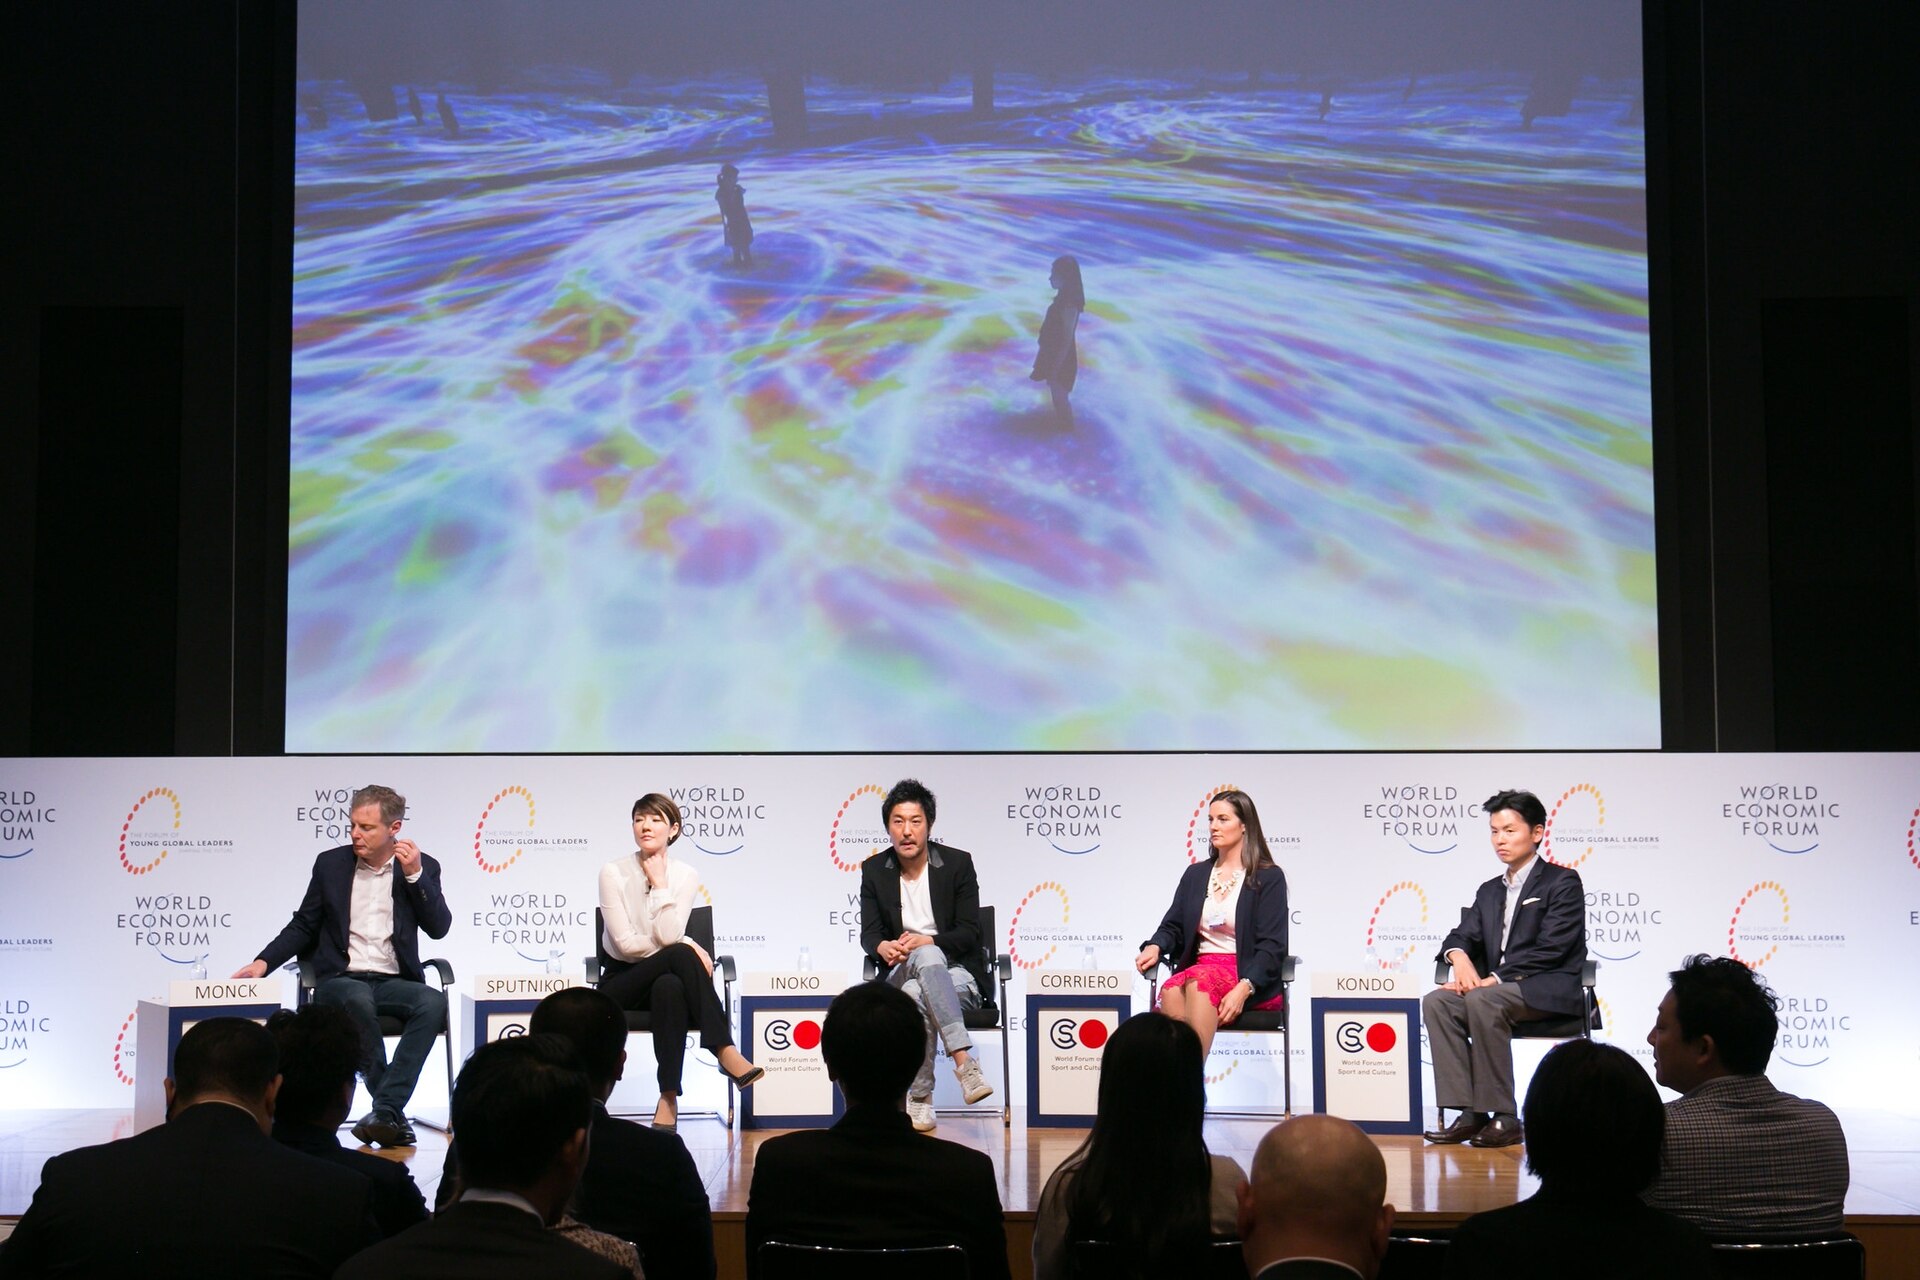 L’evento “Growing Up Digital” al World Economic Forum di Tokyo nel 2016